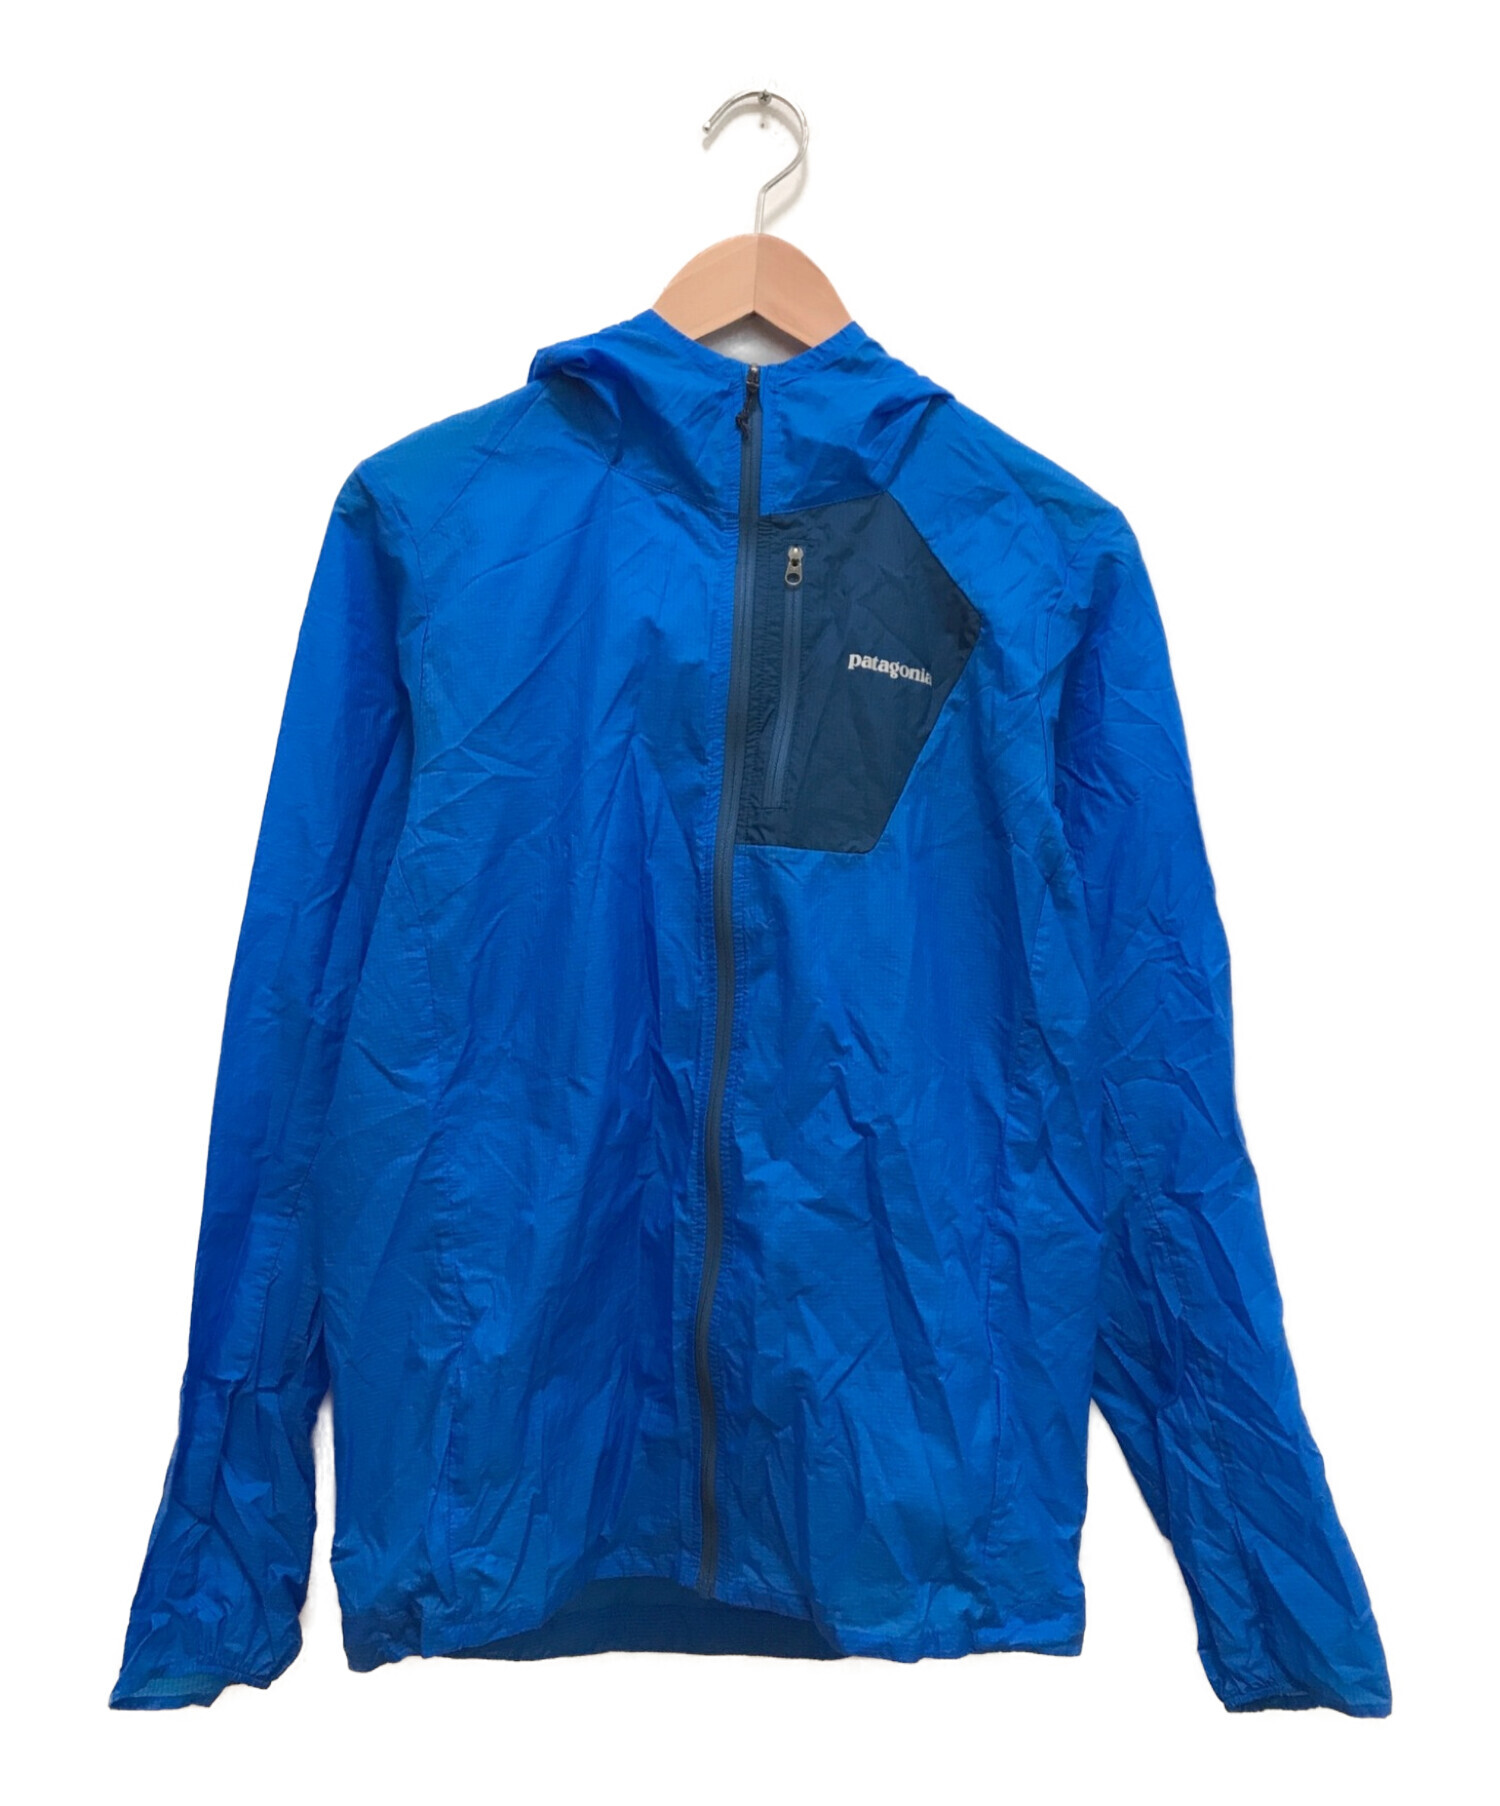 Patagonia (パタゴニア) フーディニジャケット ブルー サイズ:XS